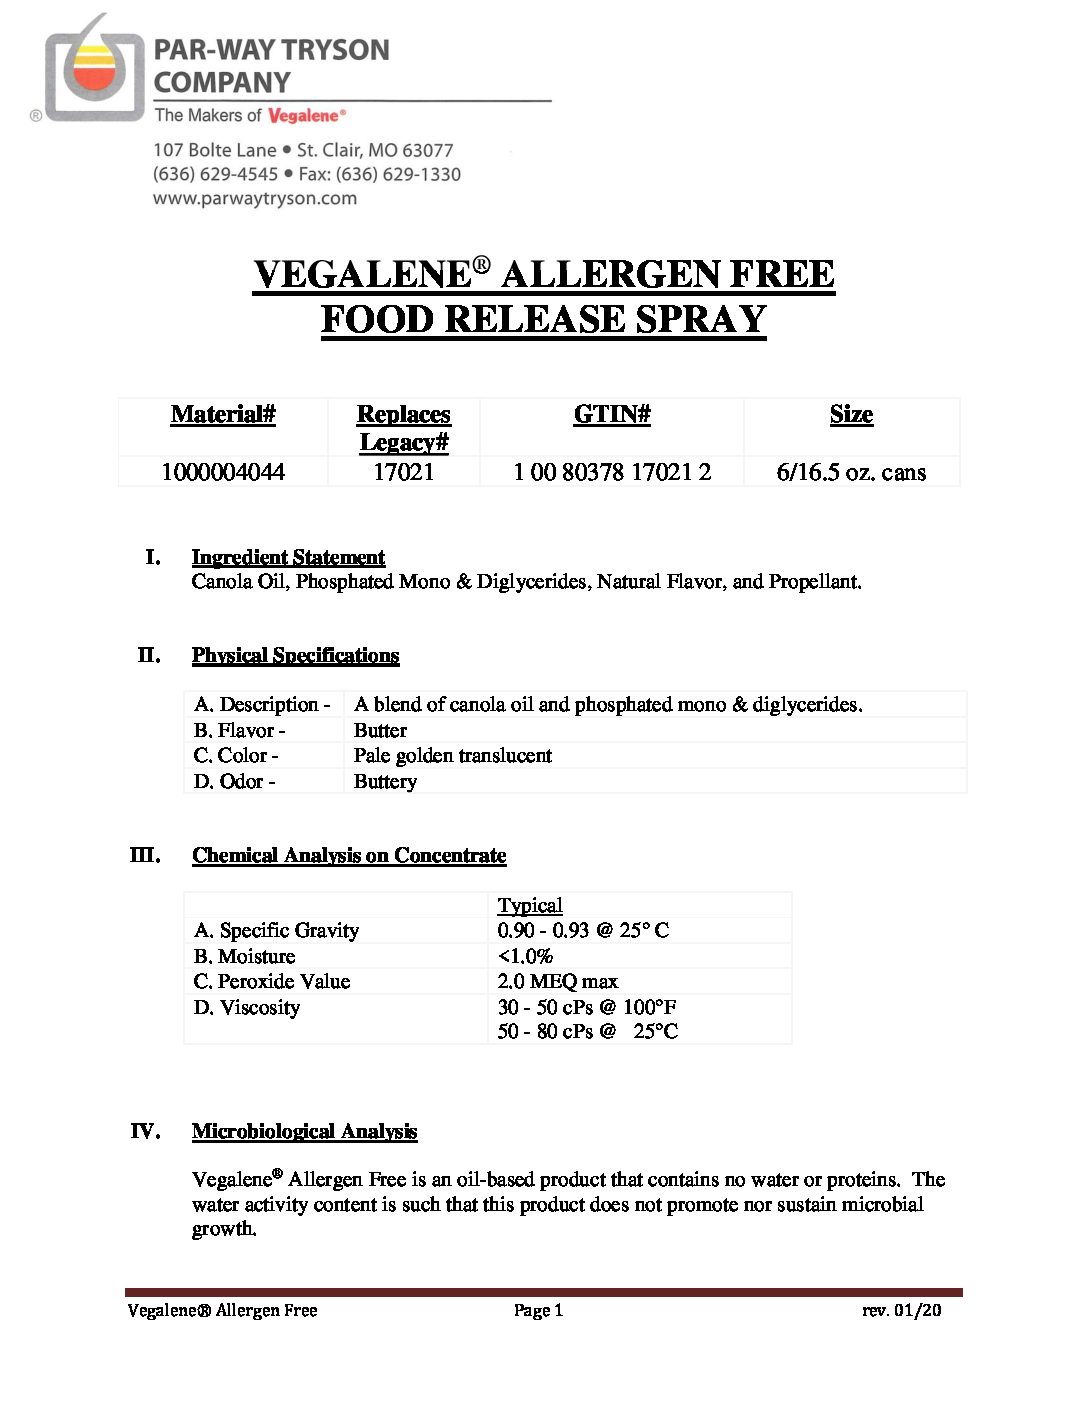 PDS – 1000004044 (17021) – Vegalene Allergen Free Fd Rel Spray 2020